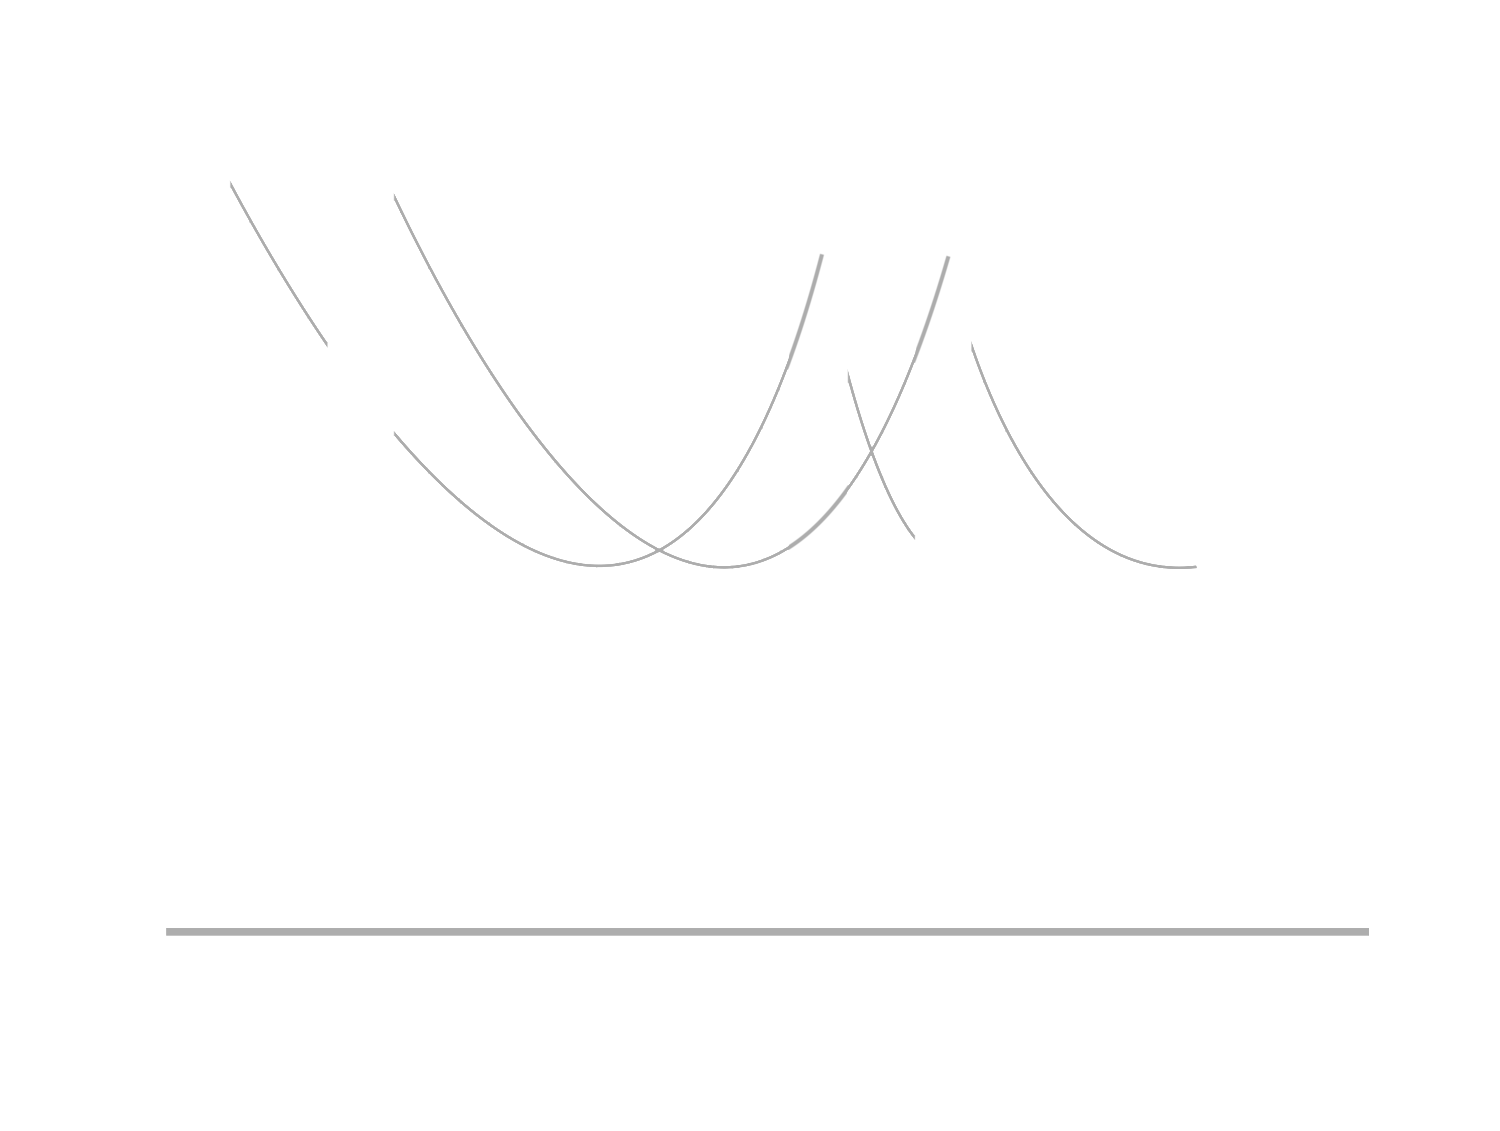 Hudson Heights Entertainment